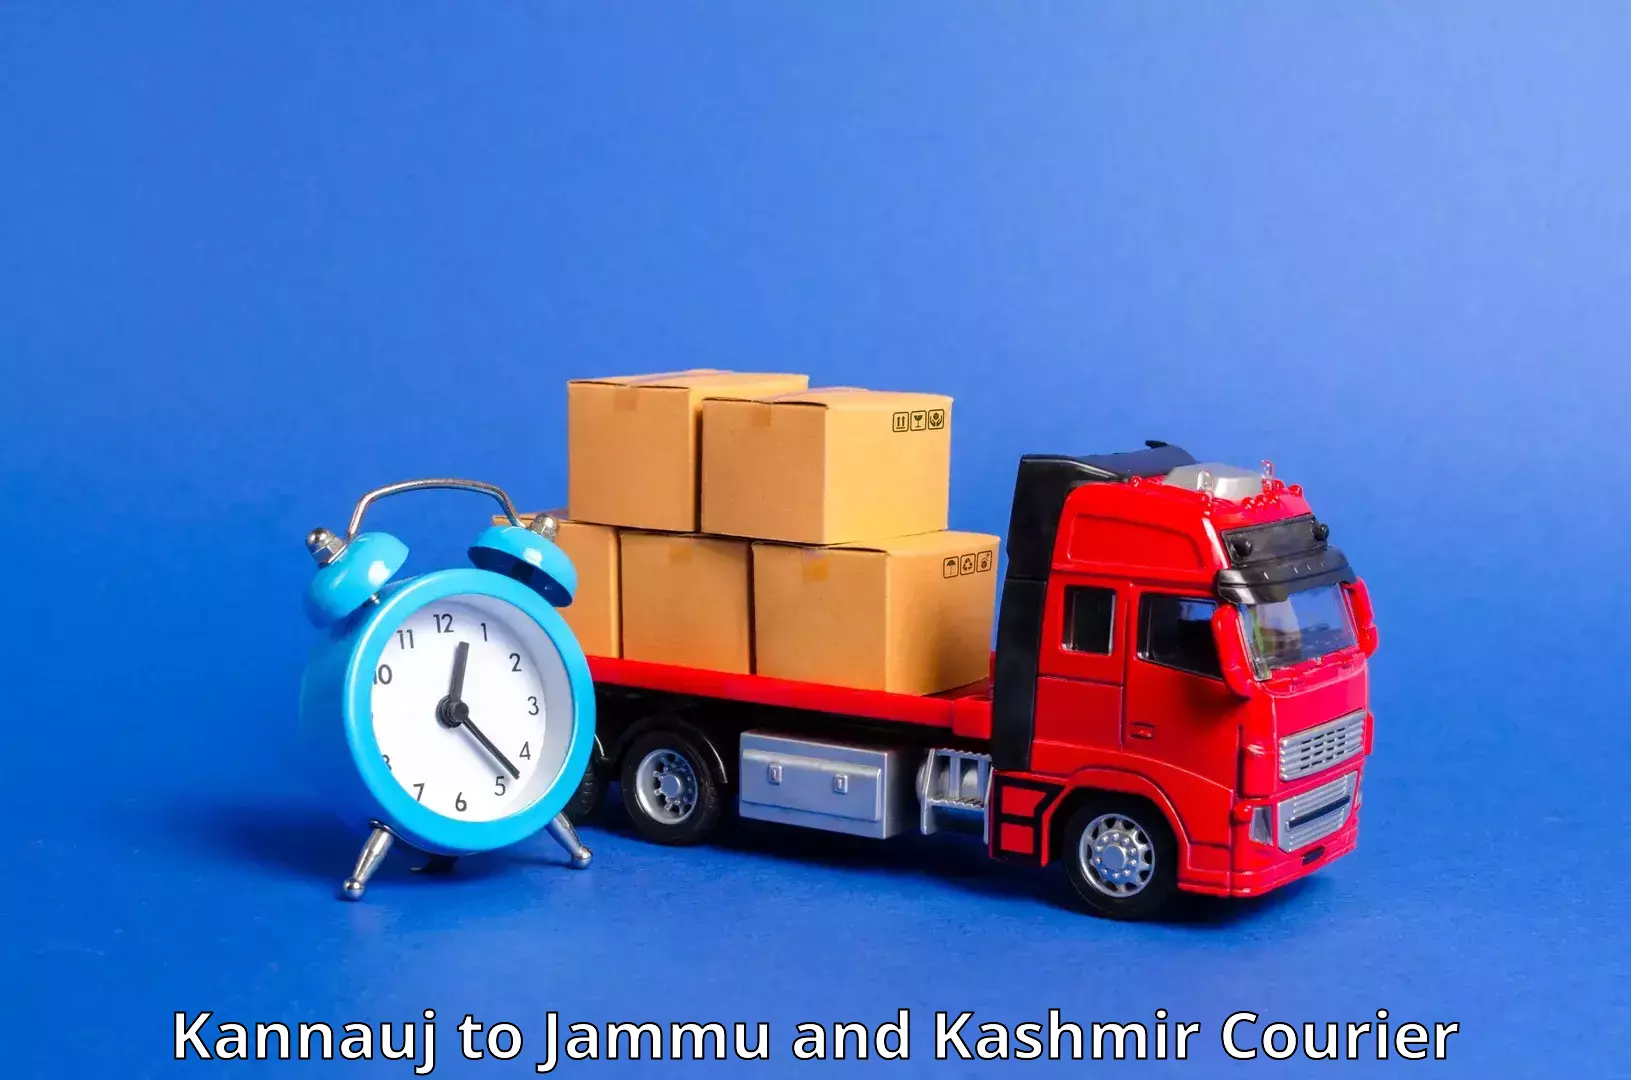 Express delivery capabilities Kannauj to Jammu and Kashmir